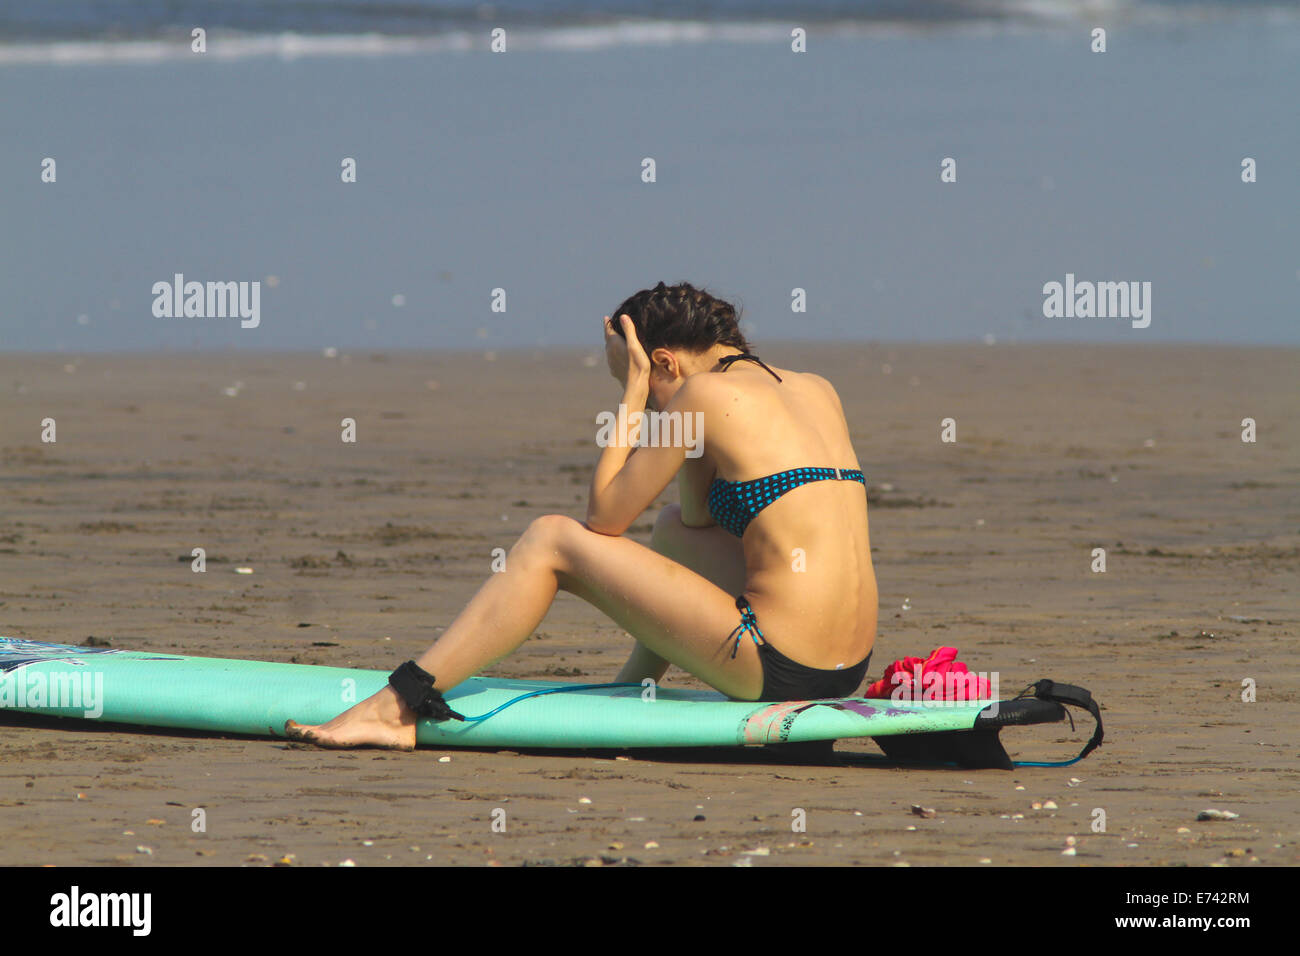 Surfen in Indonesien Stockfoto